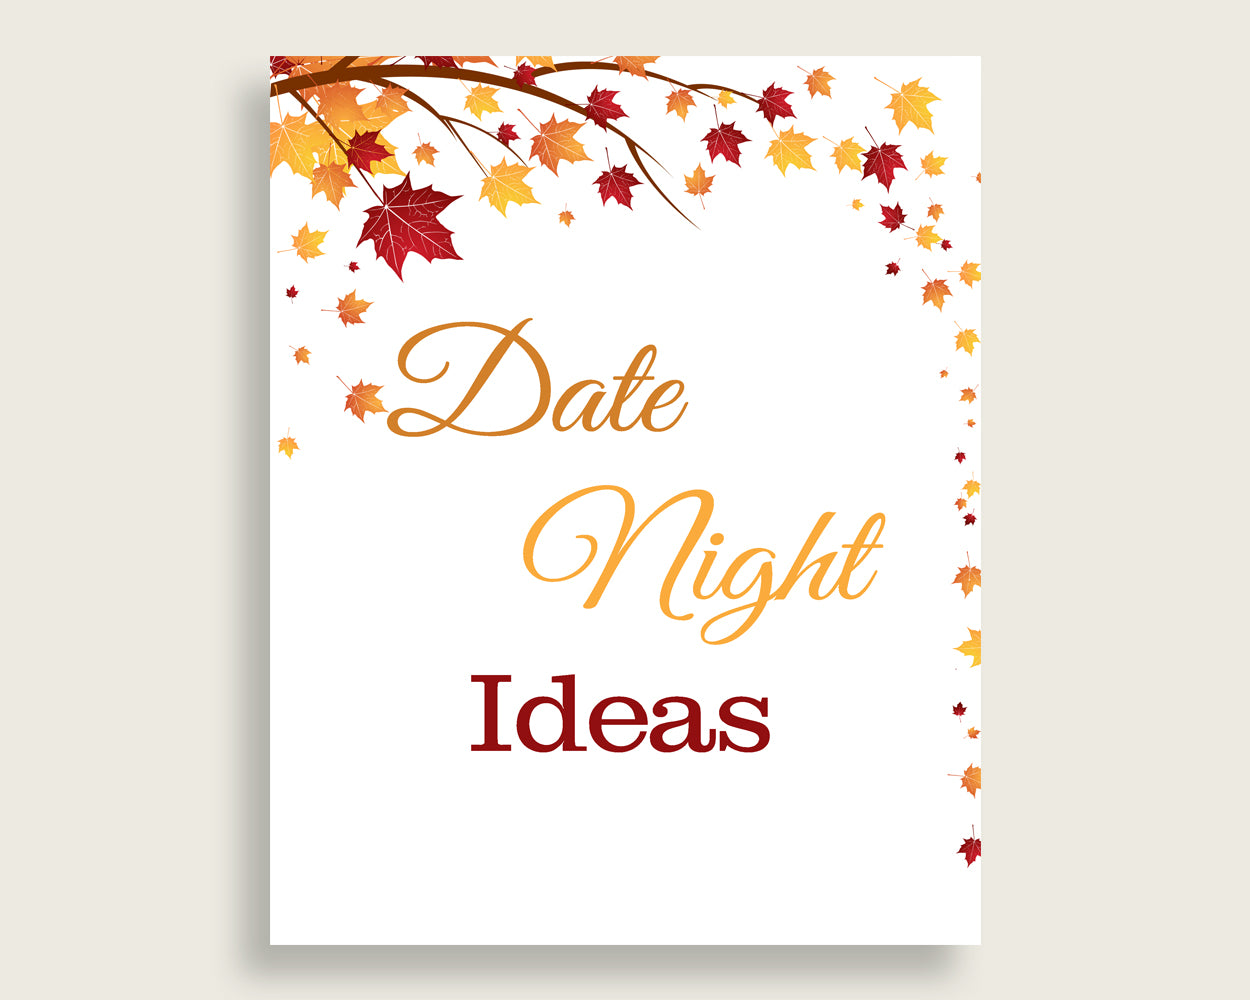 Date Night Ideas Bridal Shower Date Night Ideas Fall Bridal Shower Date Night Ideas Bridal Shower Autumn Date Night Ideas Brown Yellow YCZ2S